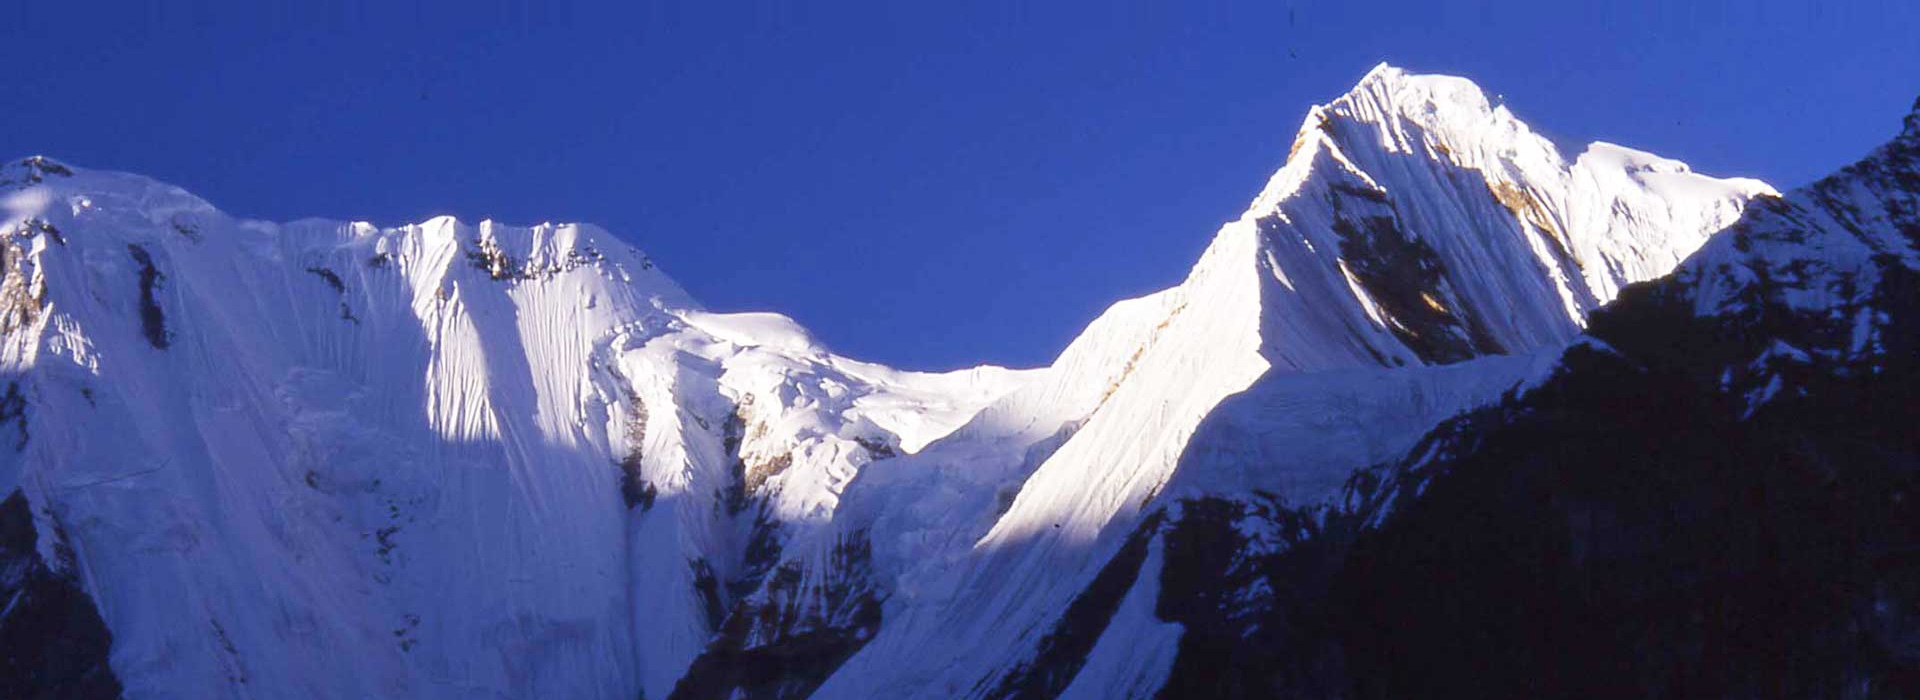 Mount Singu Chuli Peak Climbing